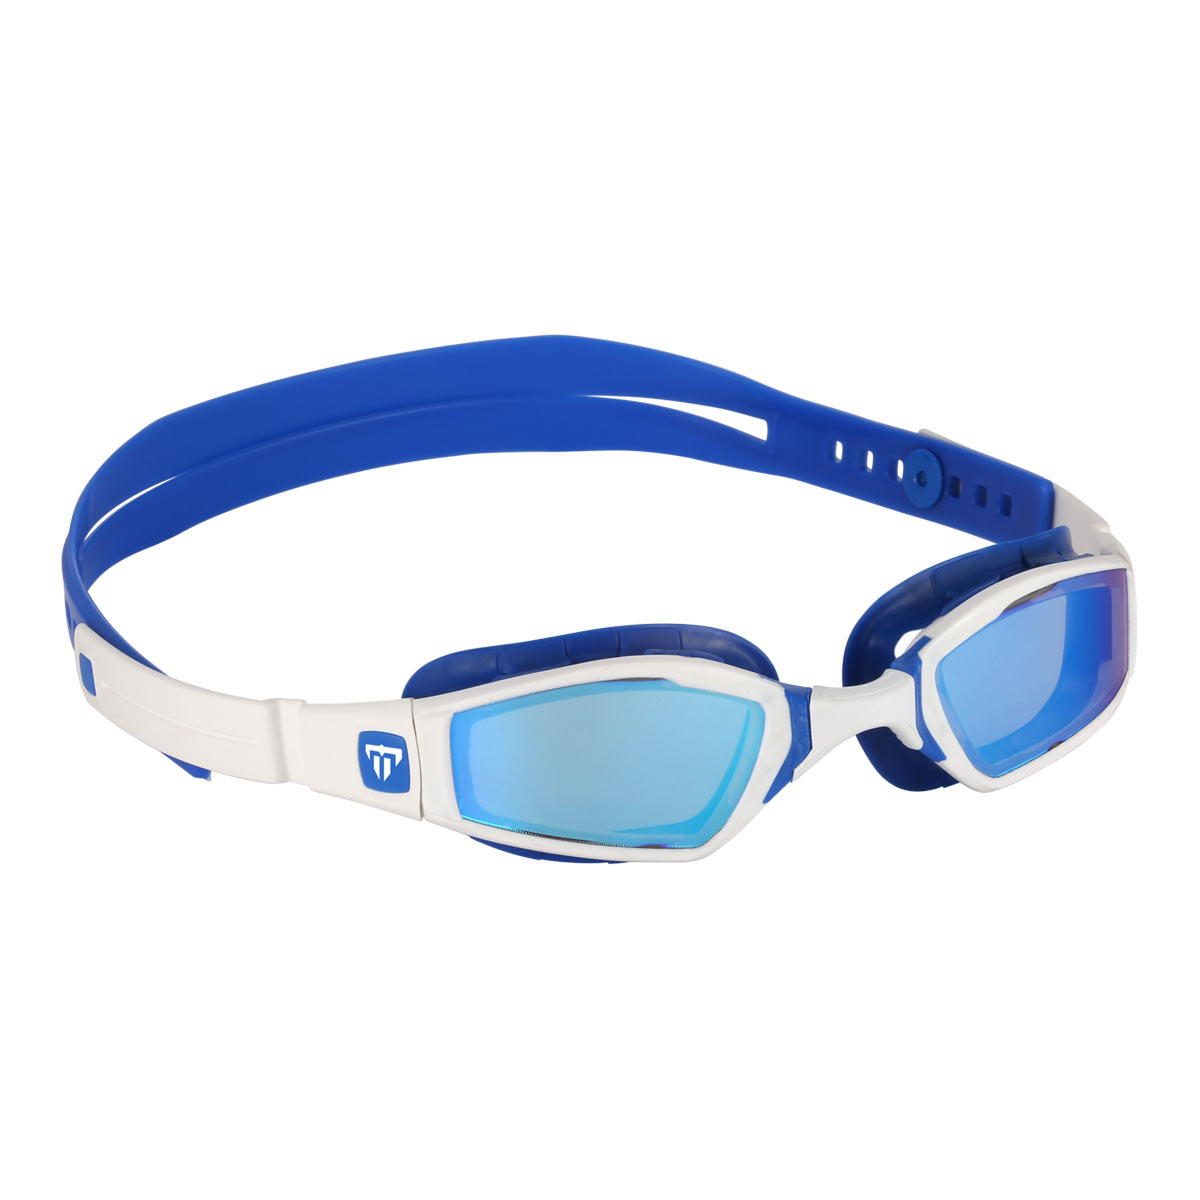 Phelps Ninja Mirrored Goggles - White / Blue